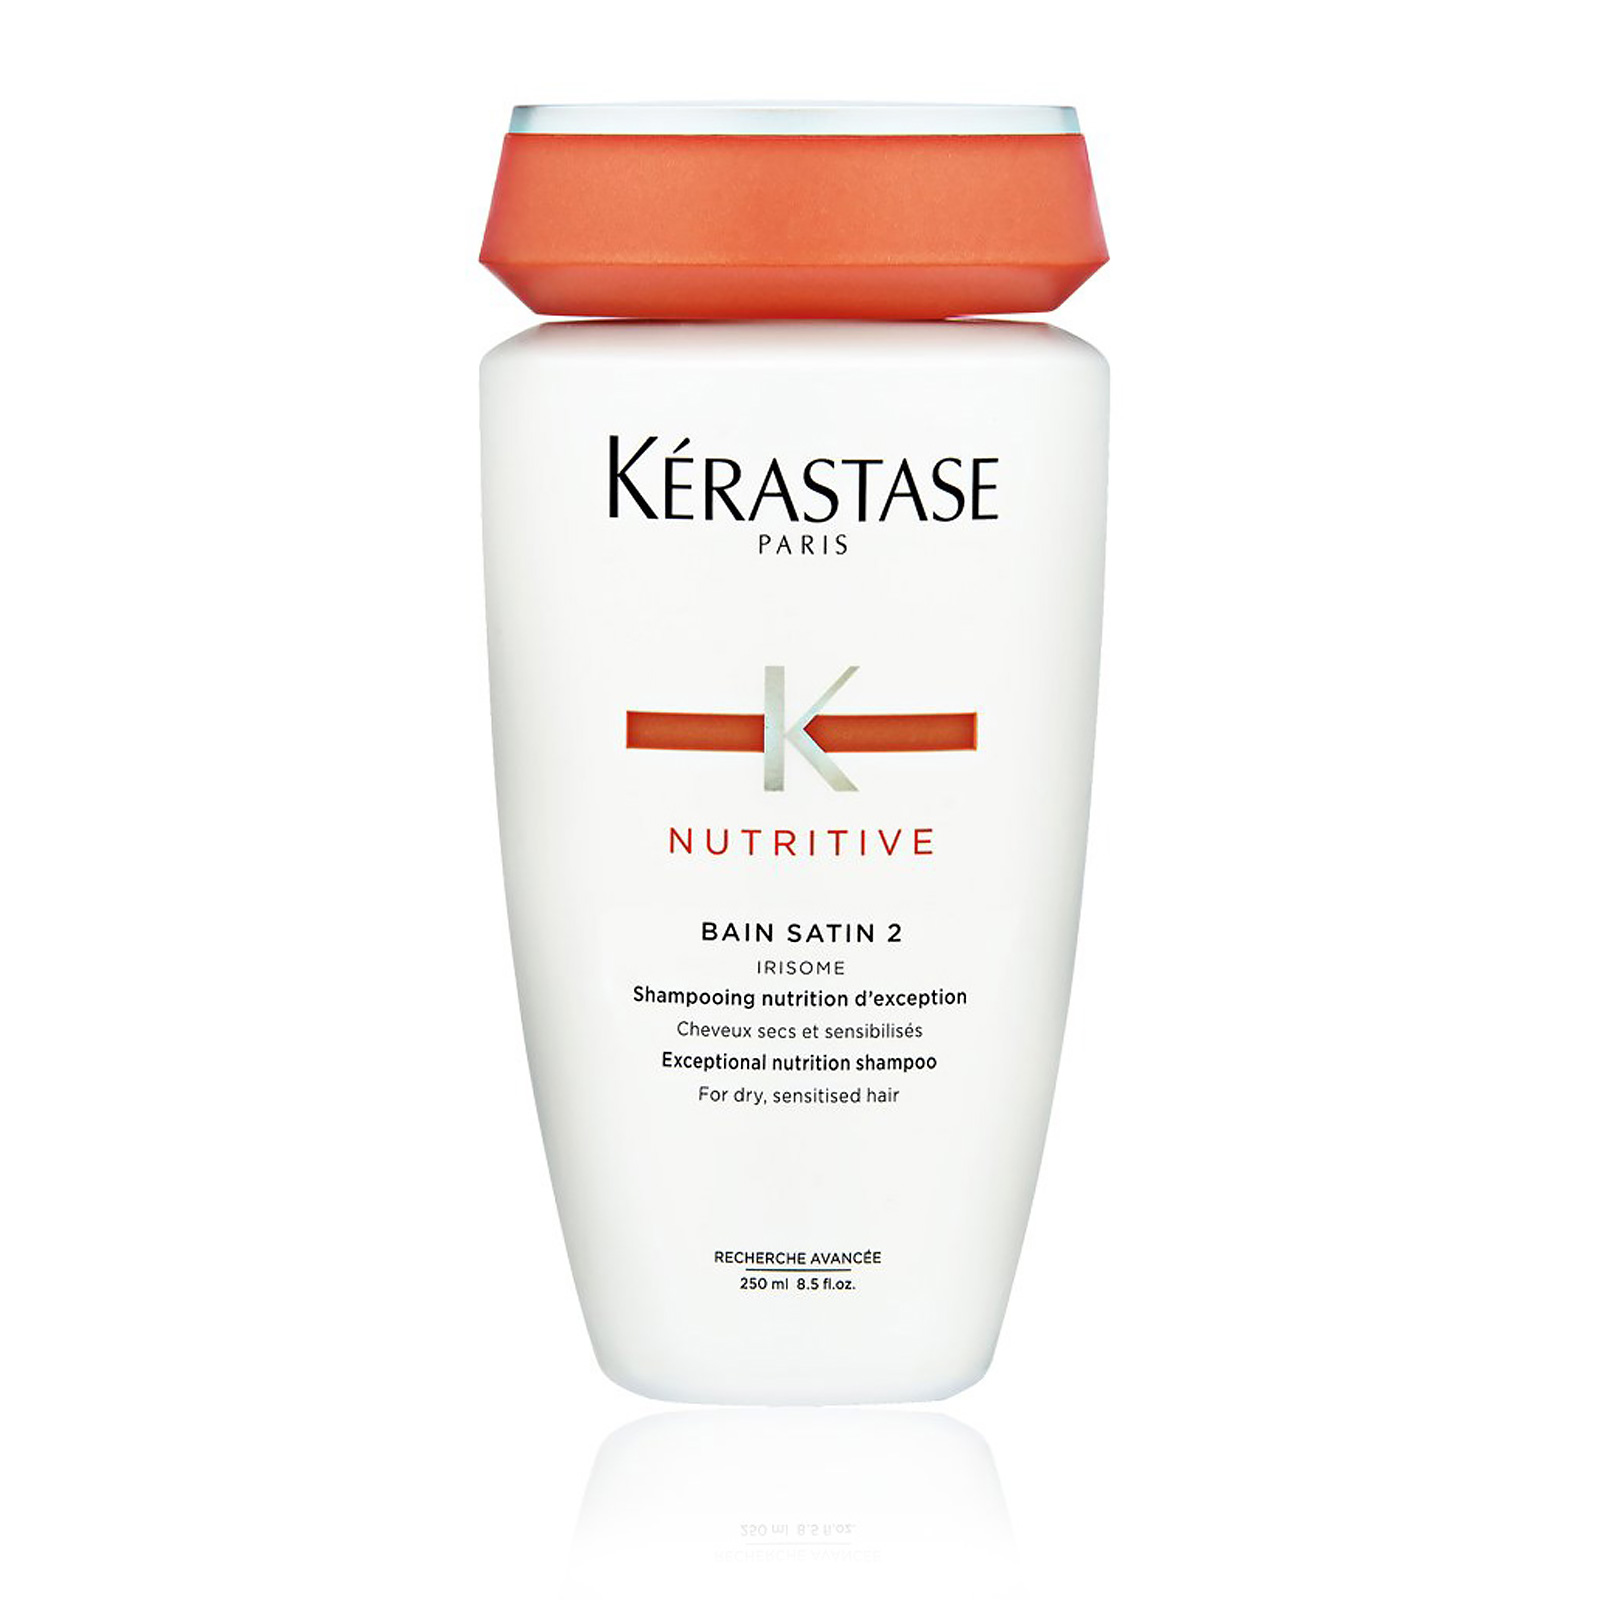 Kérastase Paris Nutritive Bain Satin 2 Irisome Exceptional Nutrition Shampoo (For Dry to Sensitised ml 8.5 AKB Beauty